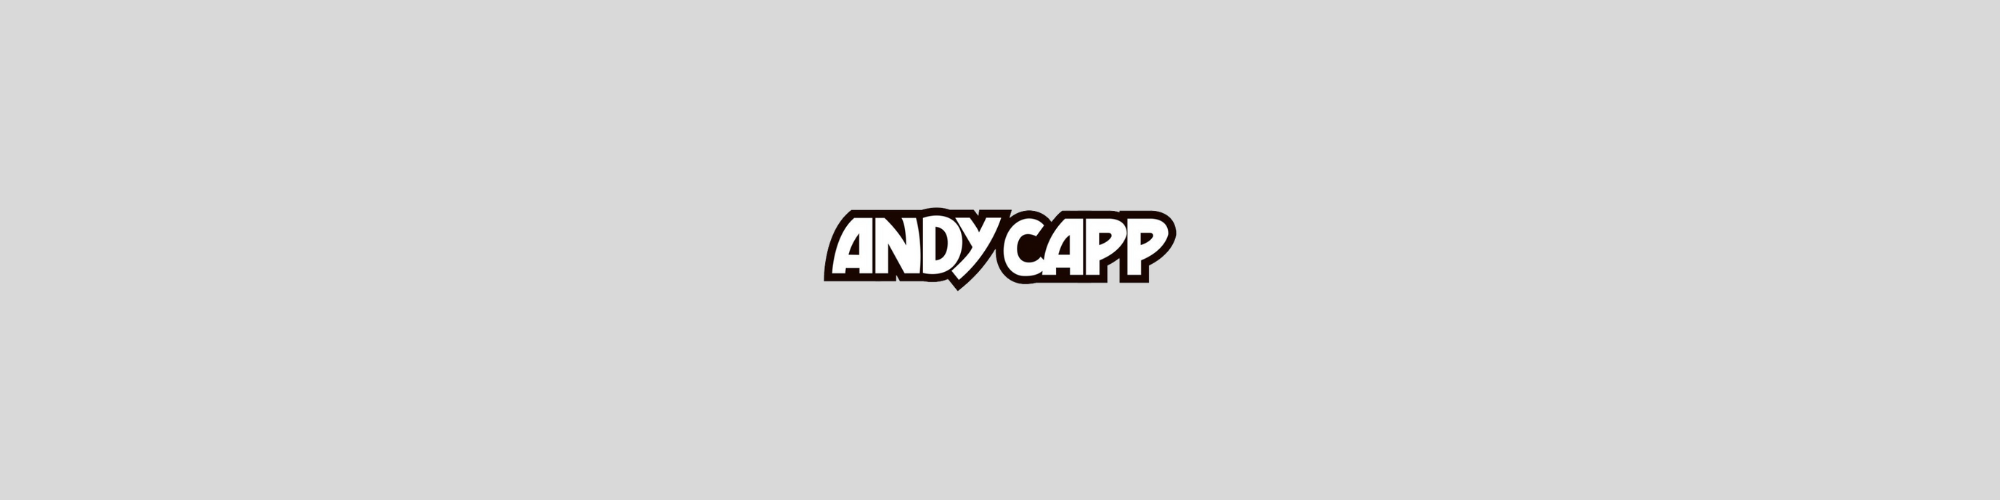 ANDY CAPP